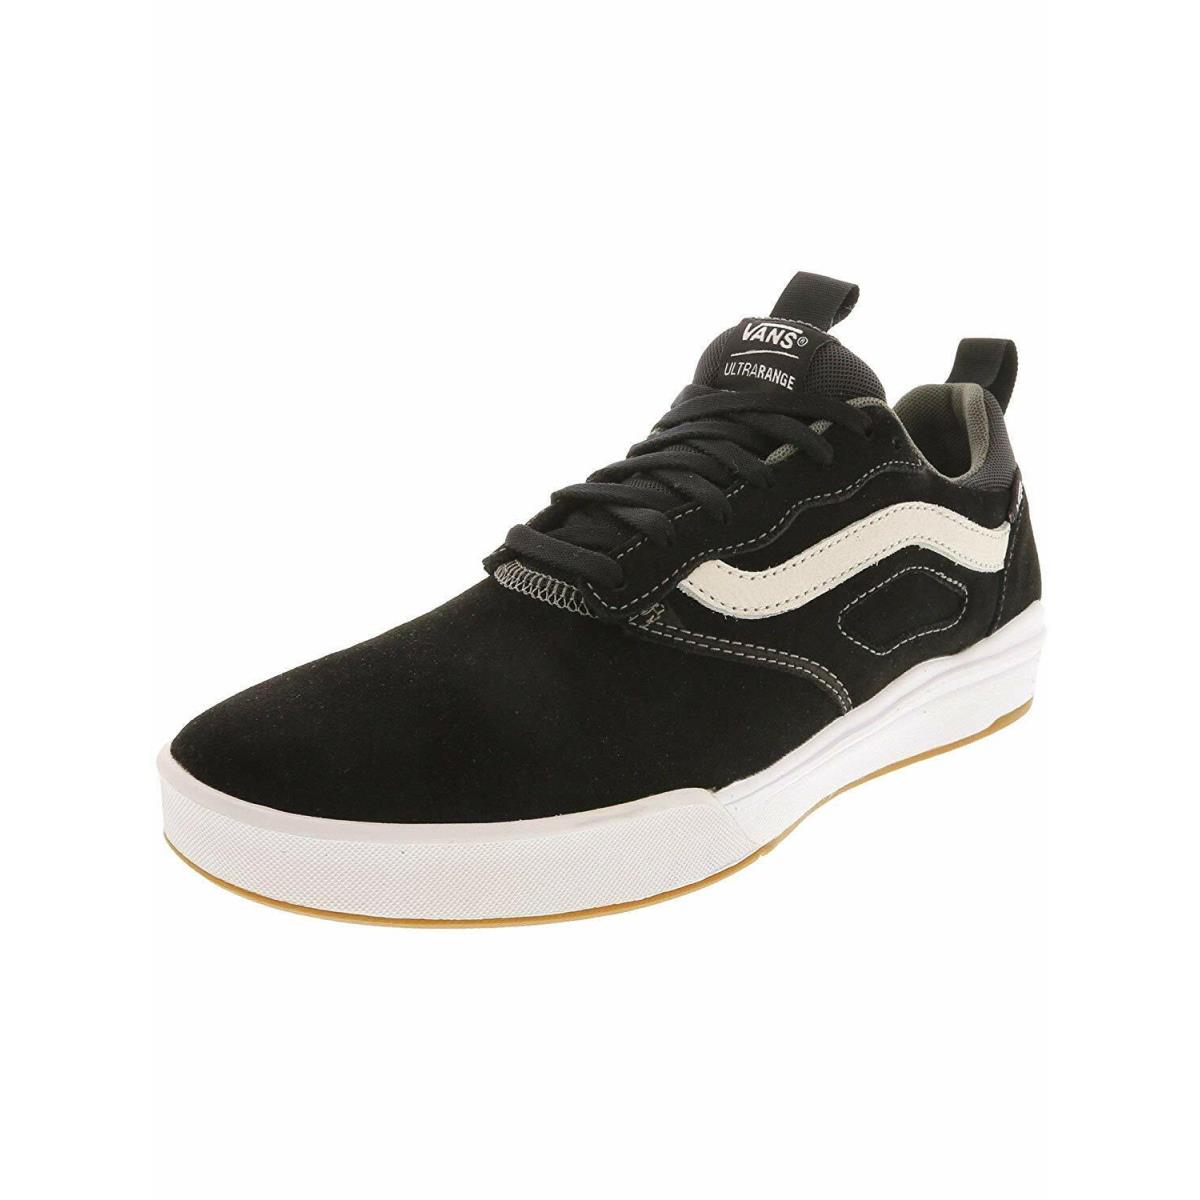 Vans Ultrarange Pro Skate Black White Mens Mesh Low-top Sneakers Shoes 6.5